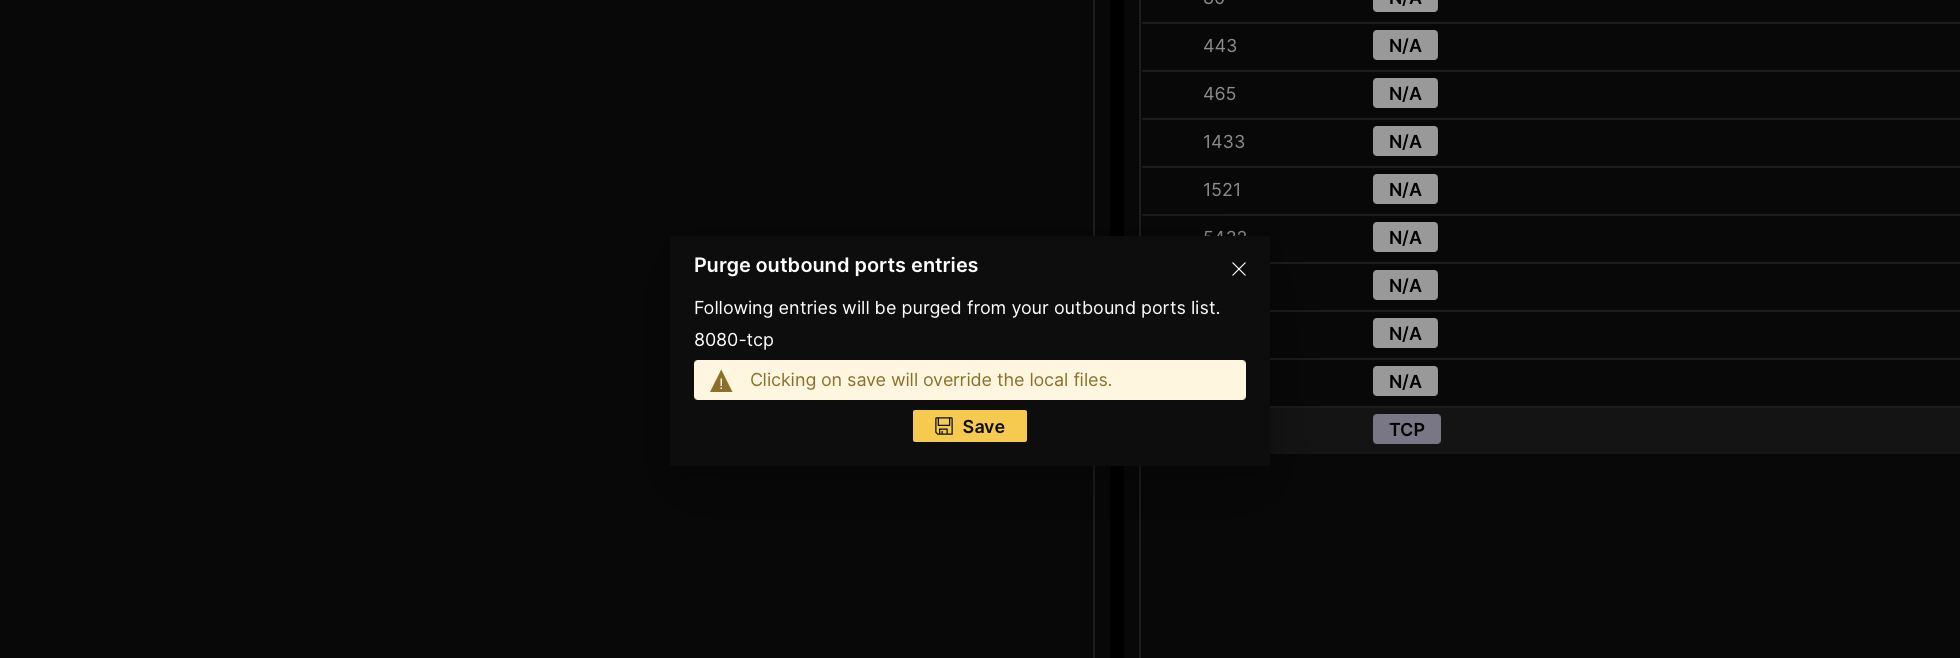 purge outbound port entries